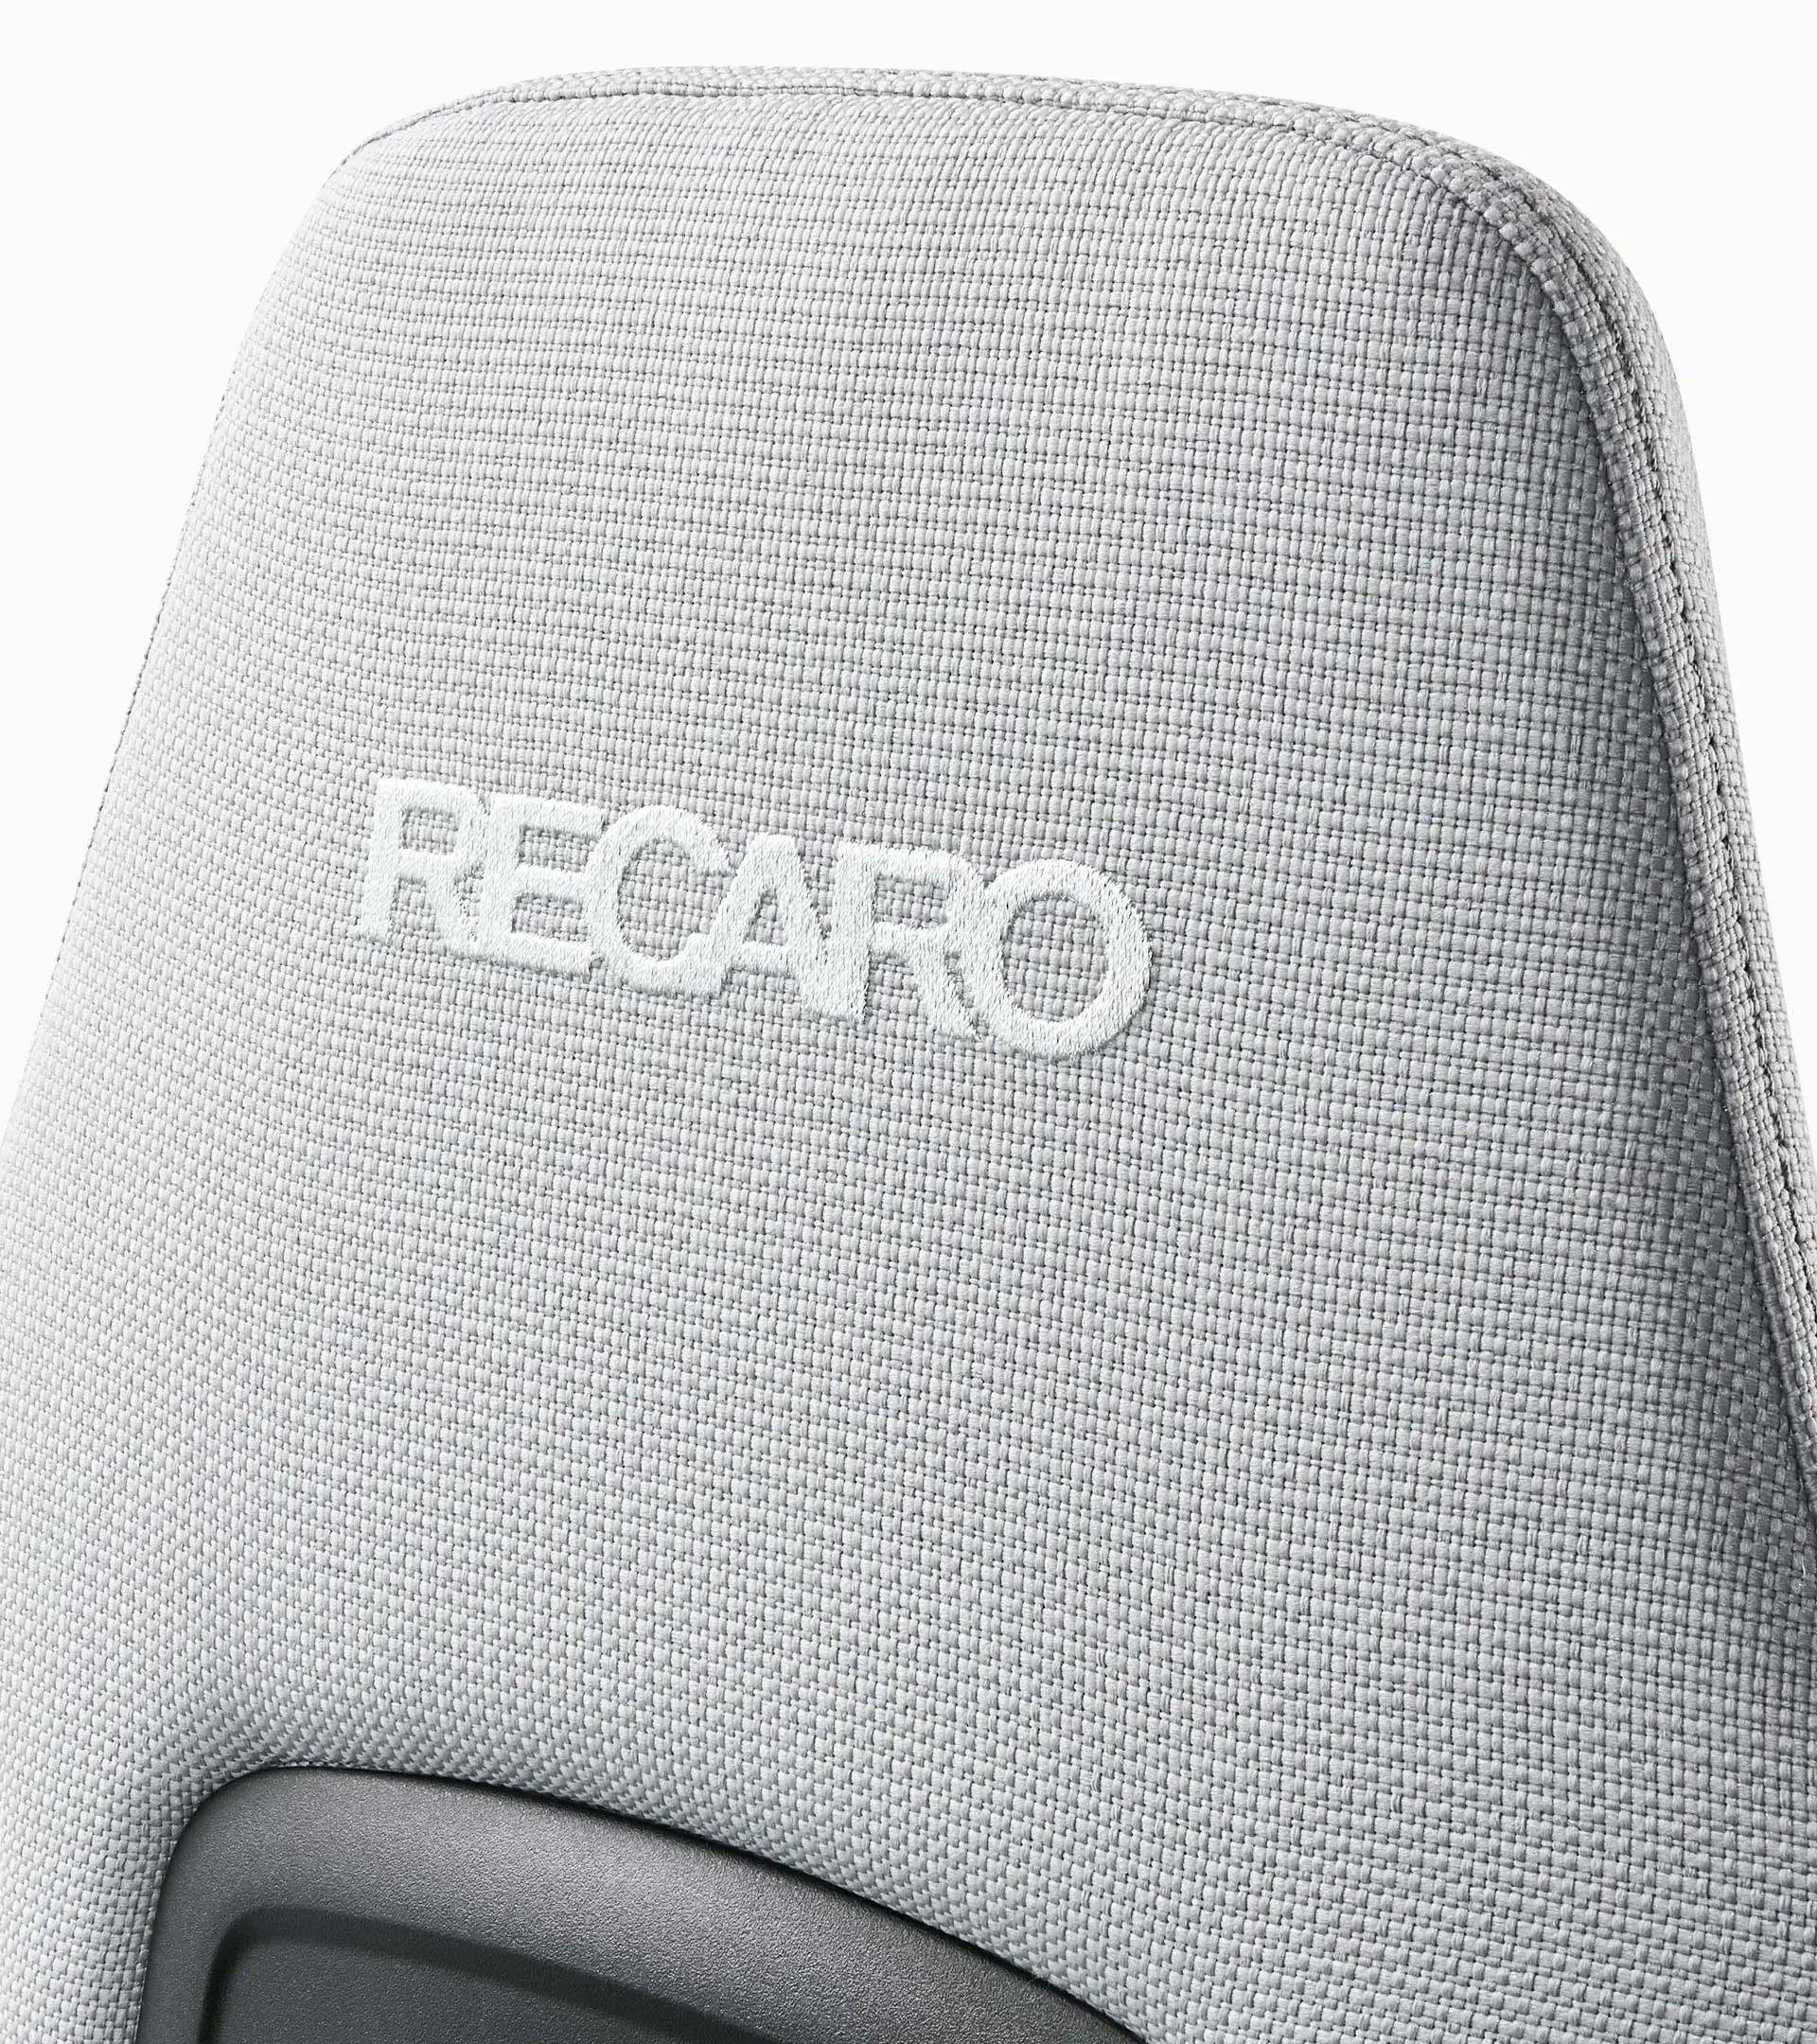 RECARO x Porsche Gaming Chair Limited Edition 7